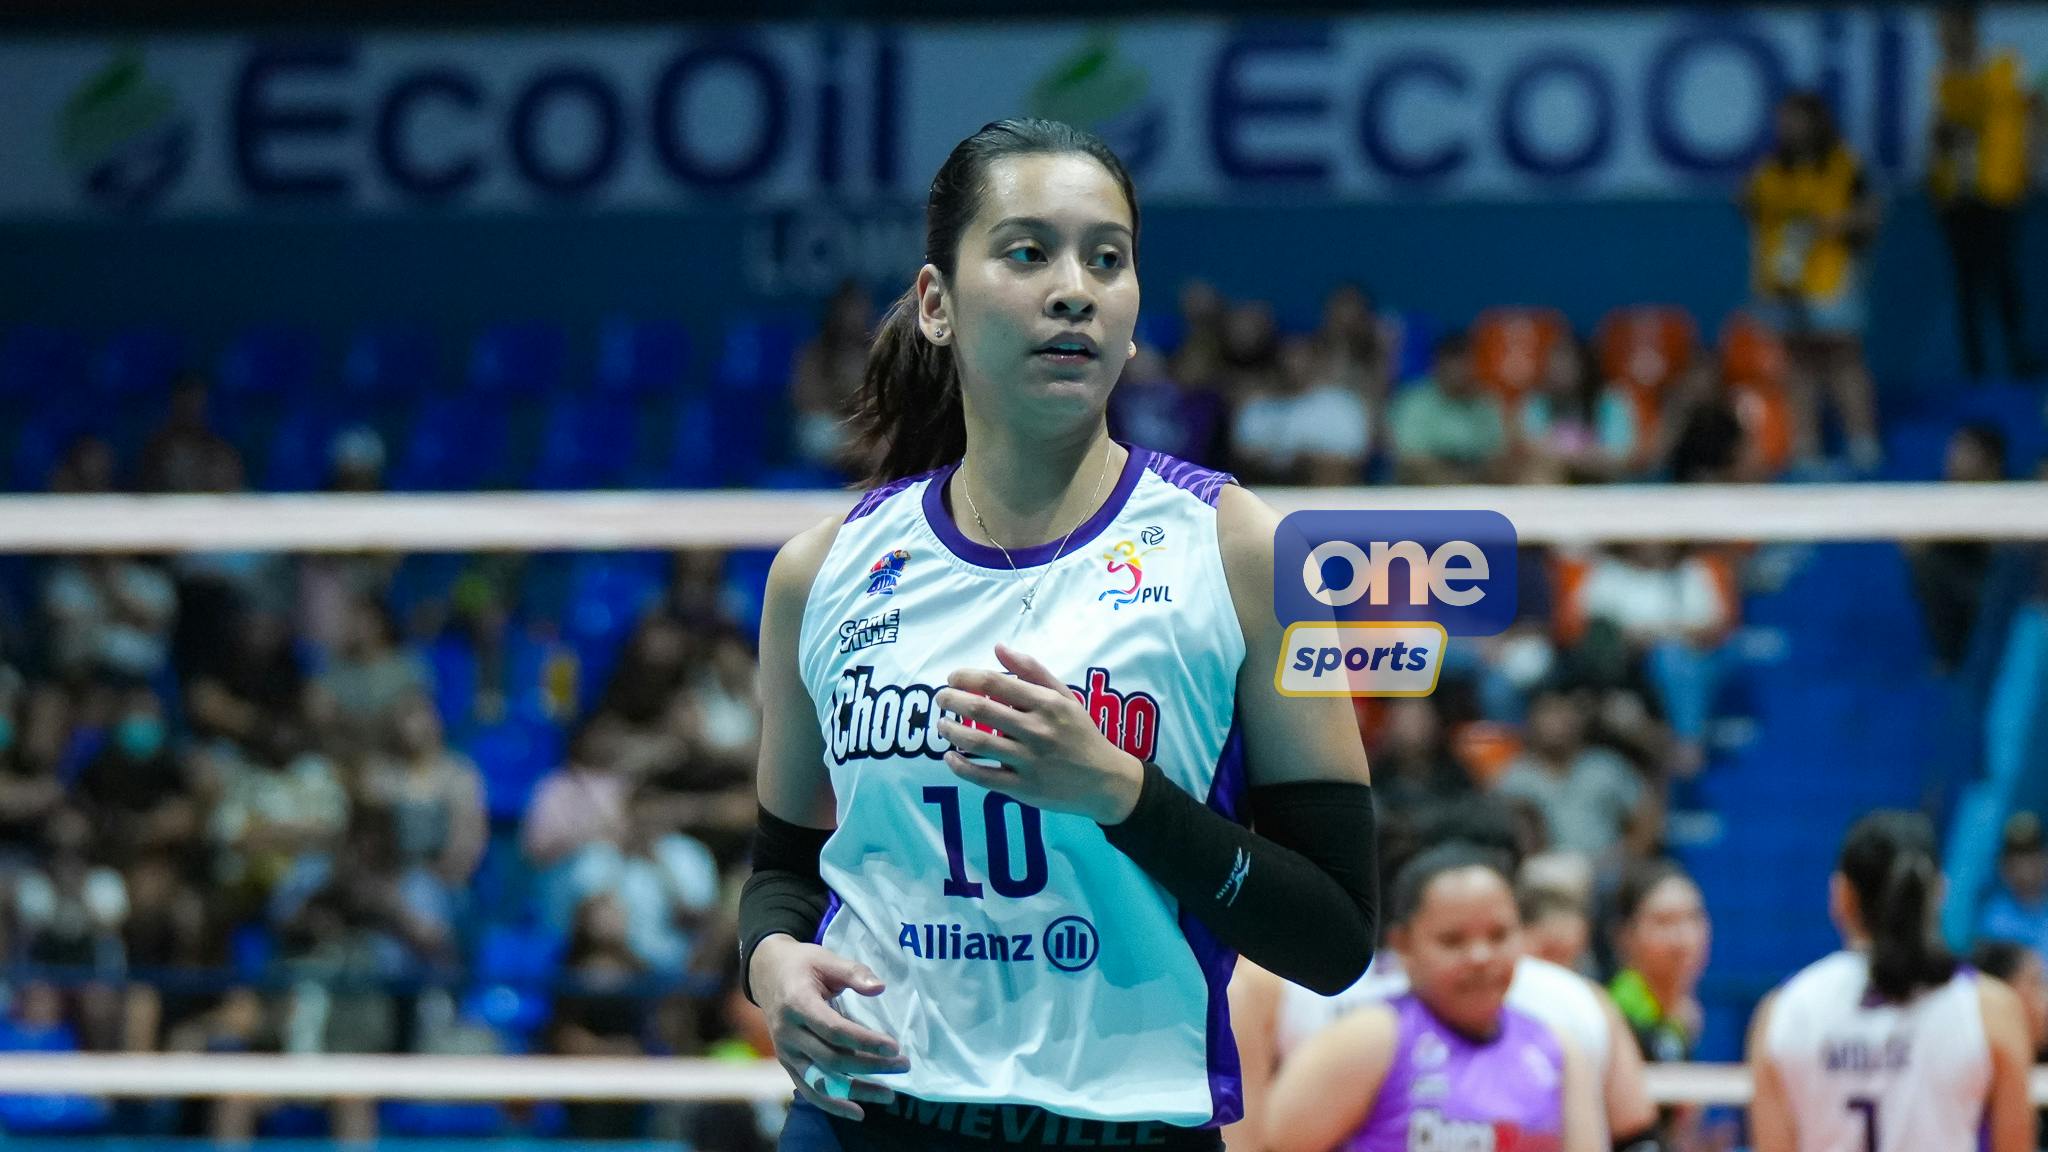 PVL: Choco Mucho return still uncertain for Kat Tolentino, says Dante Alinsunurin